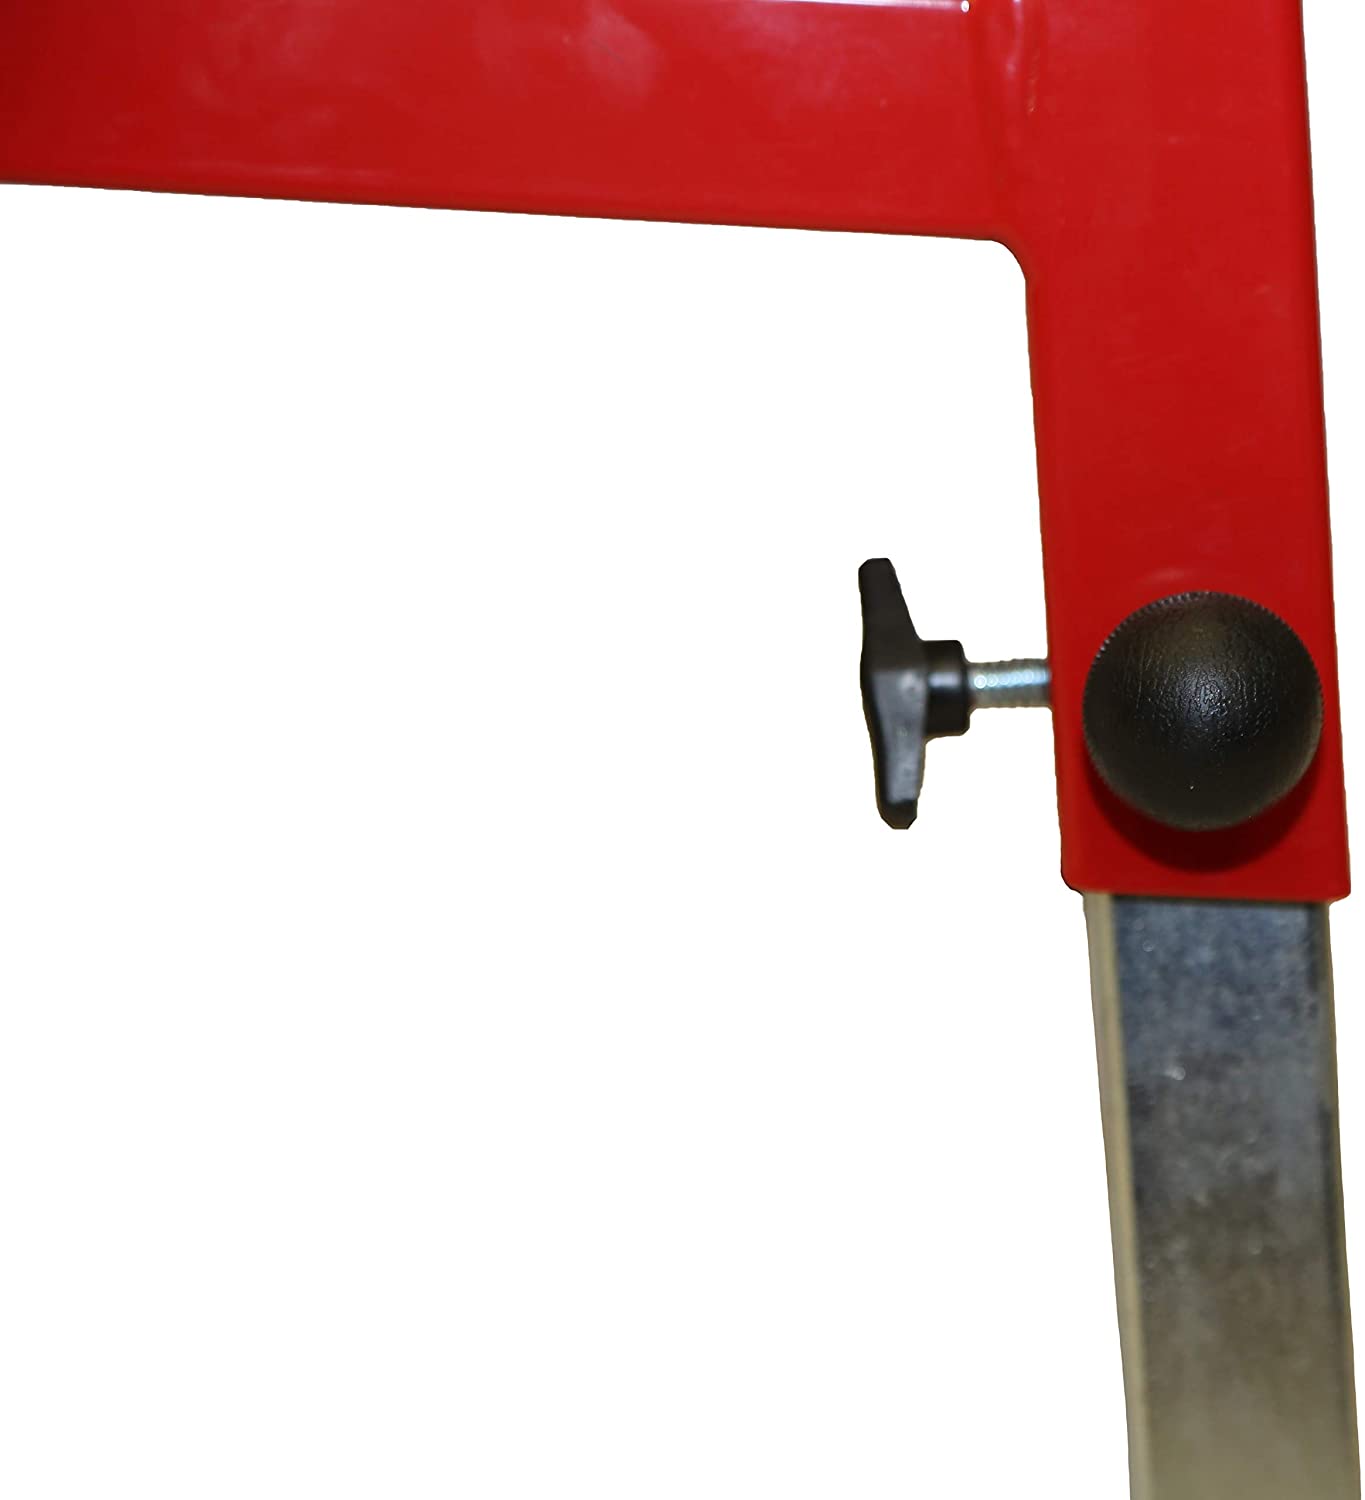 High Quality Plyometric Adjustable Jump Box - Red/Black